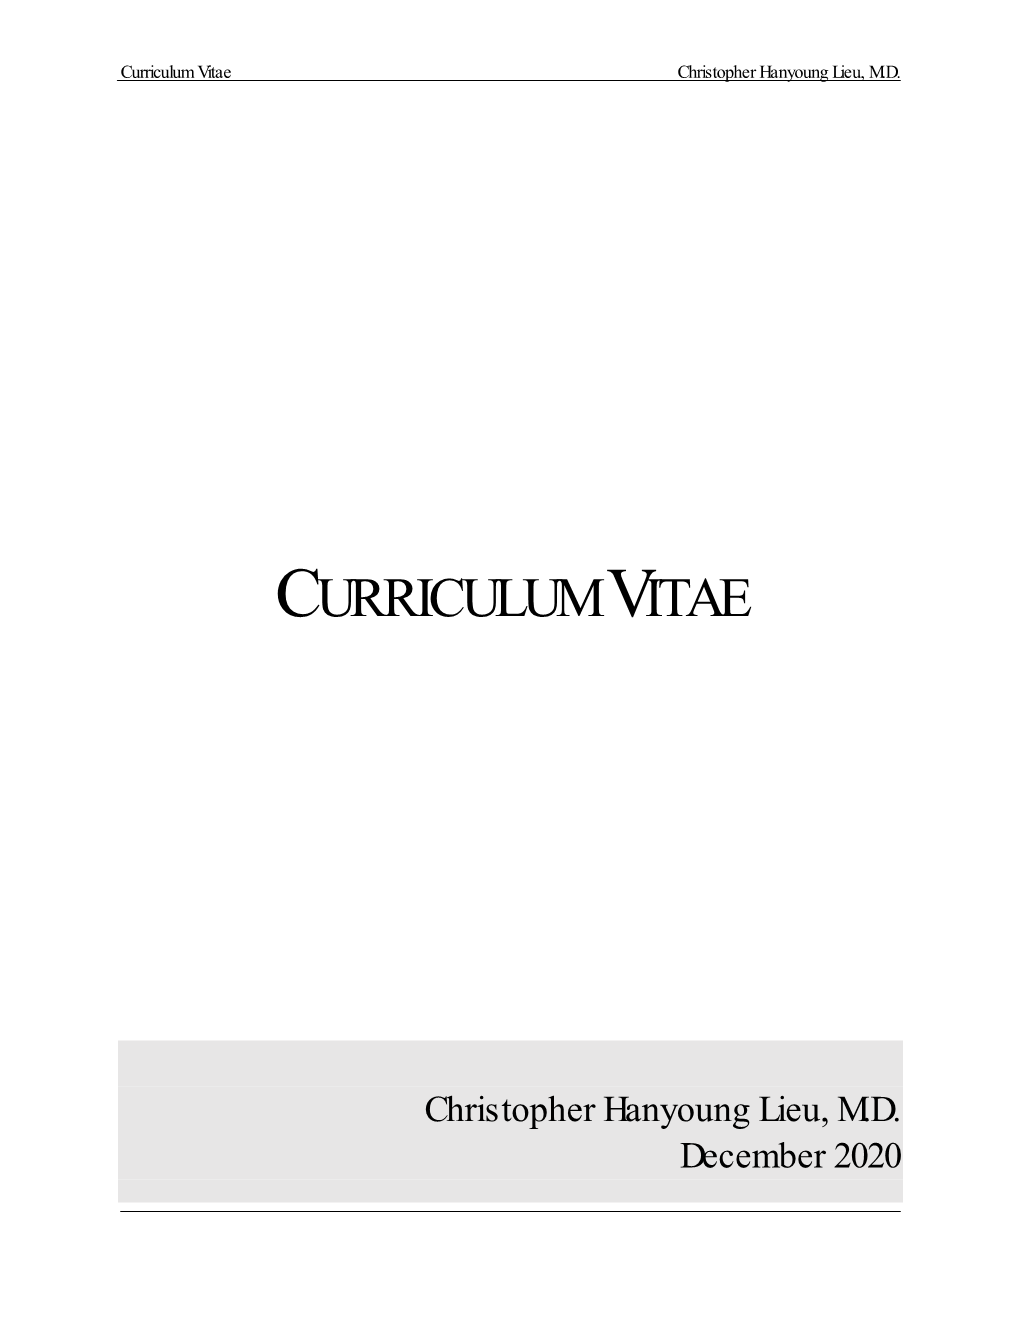 Curriculum Vitae Christopher Hanyoung Lieu, M.D